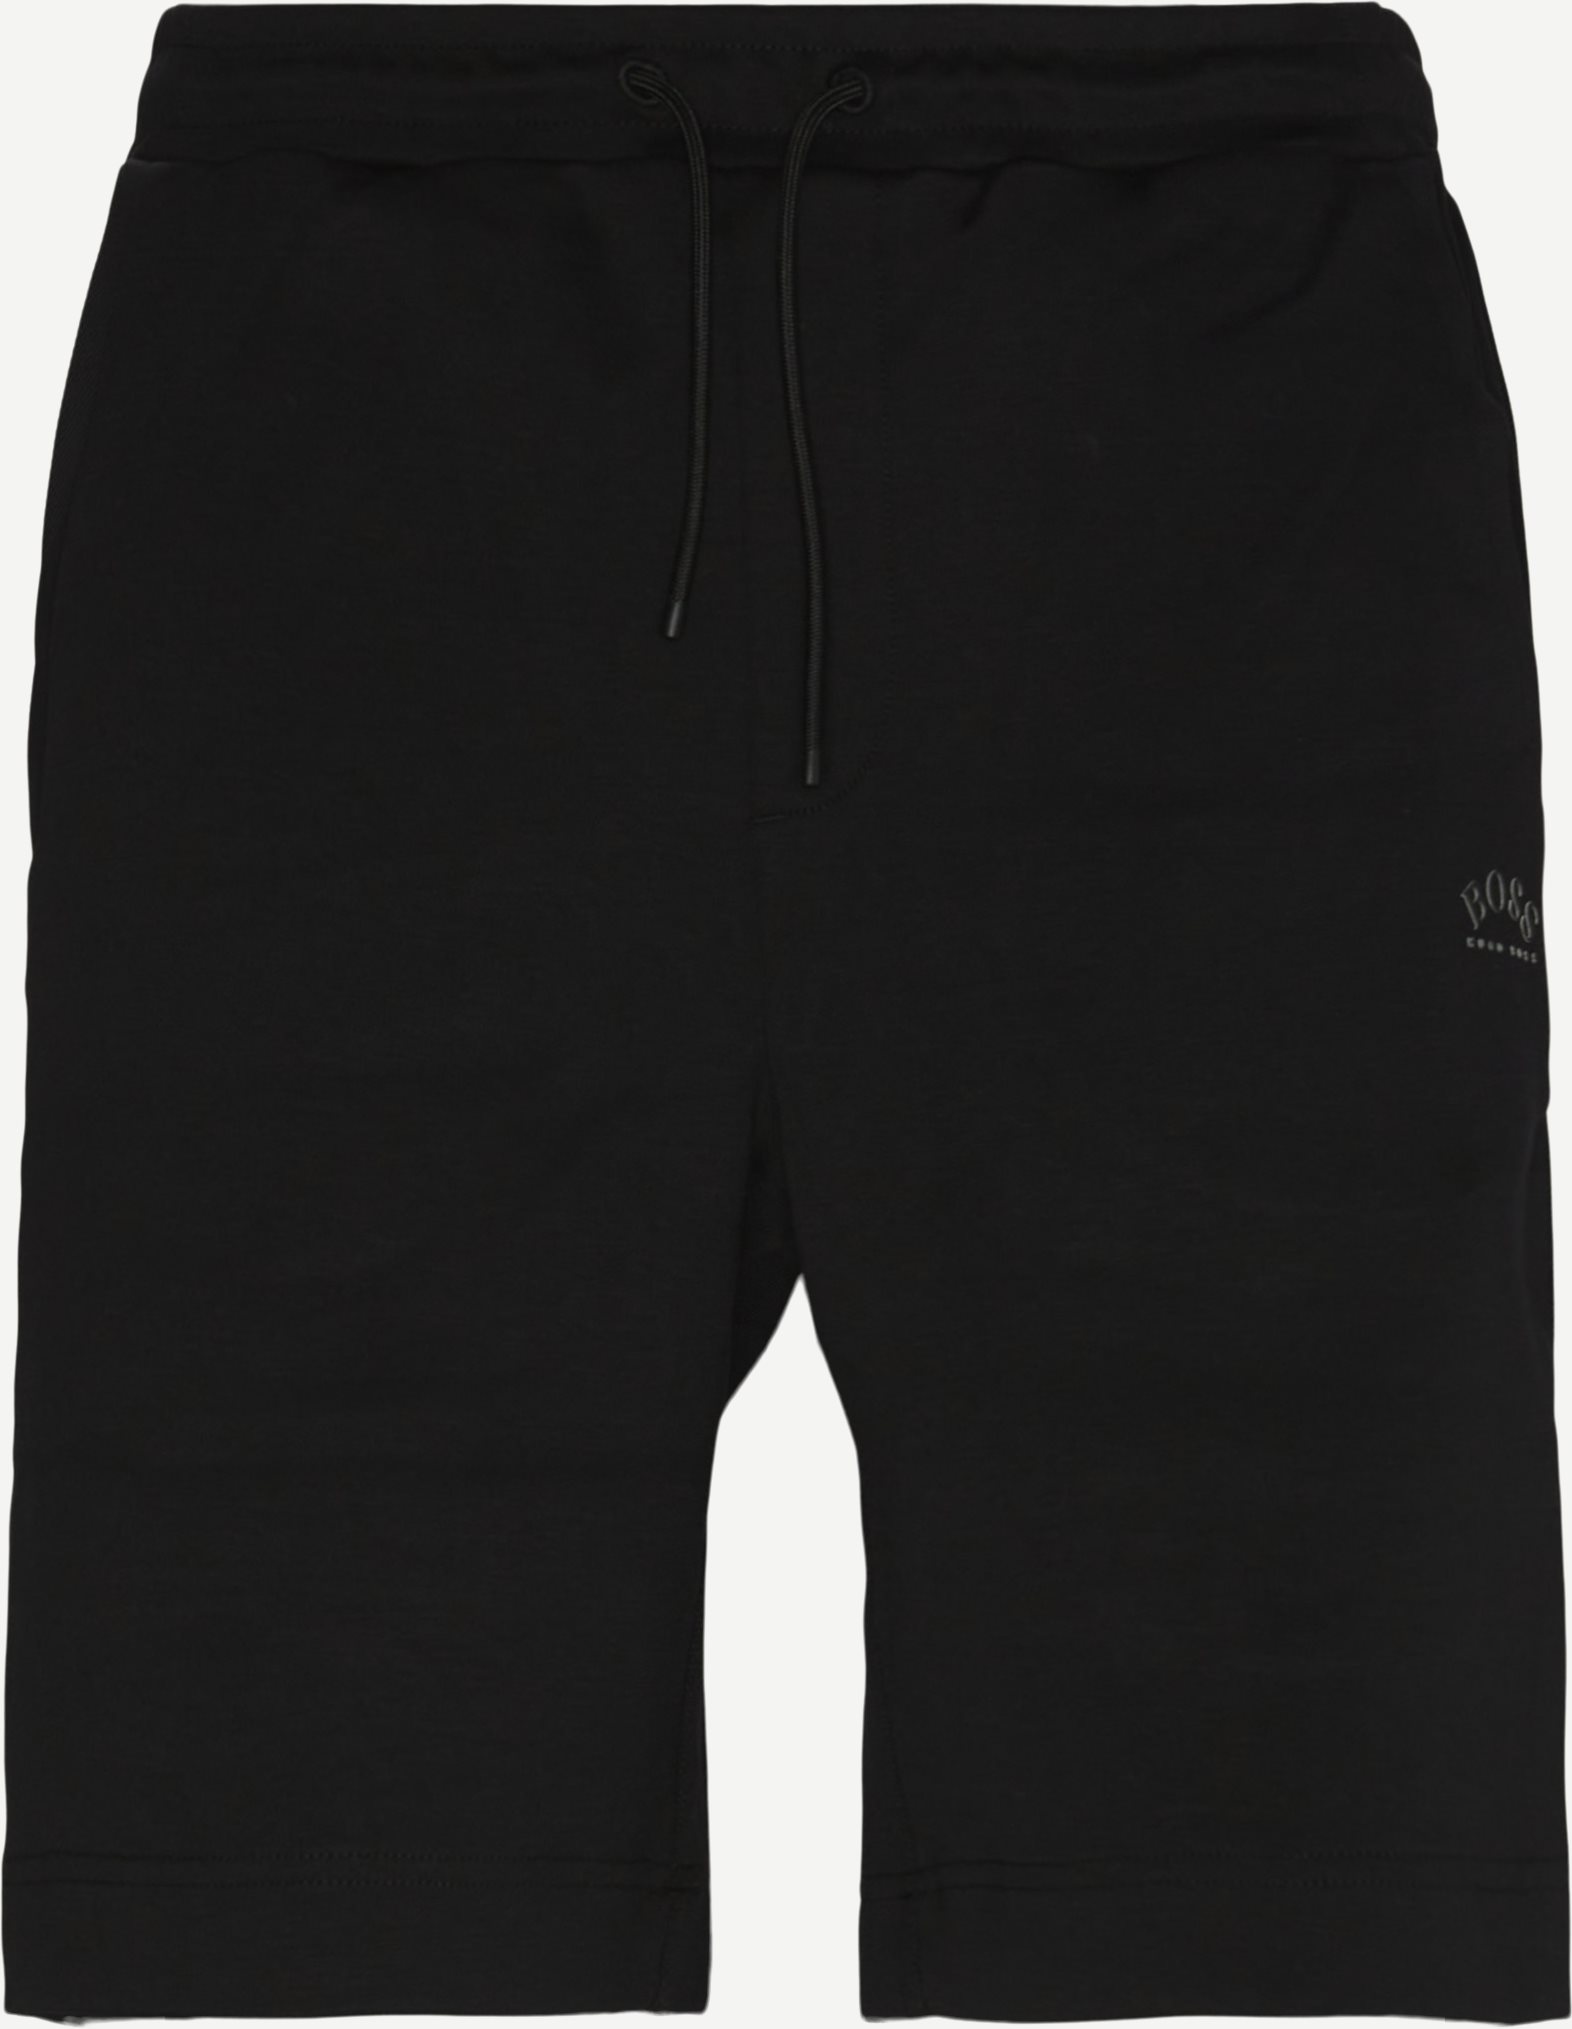 Headlo 2 Sweatshorts - Shorts - Regular fit - Sort